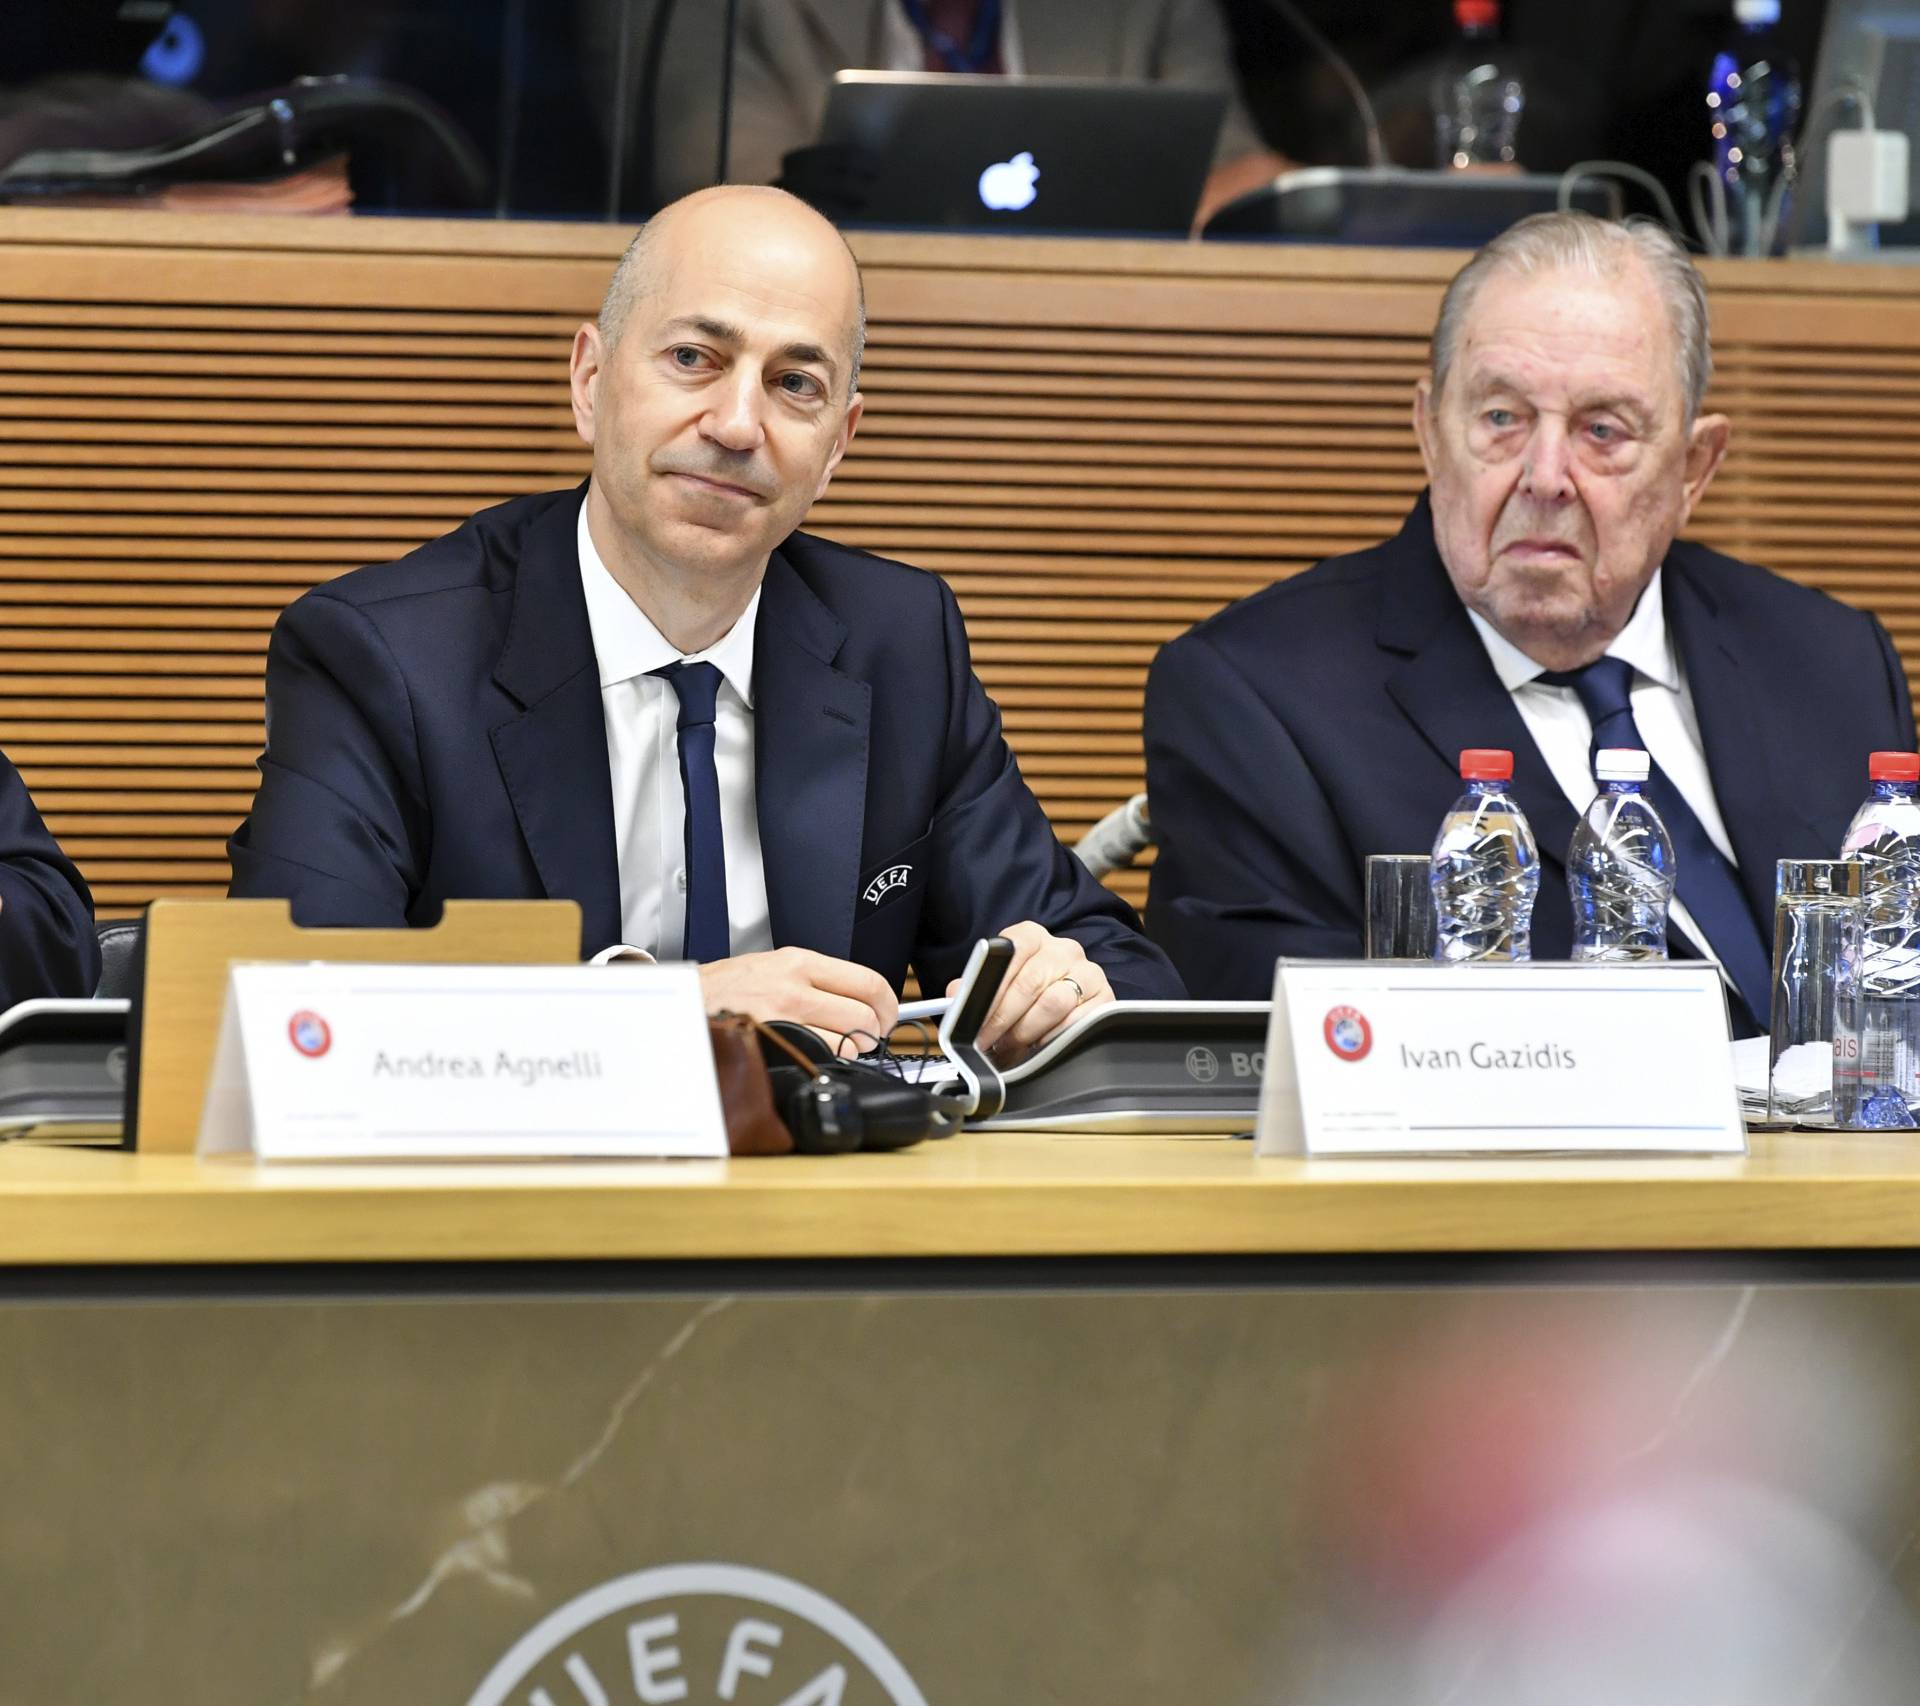 UEFA meeting before decision on European Championship host 2024